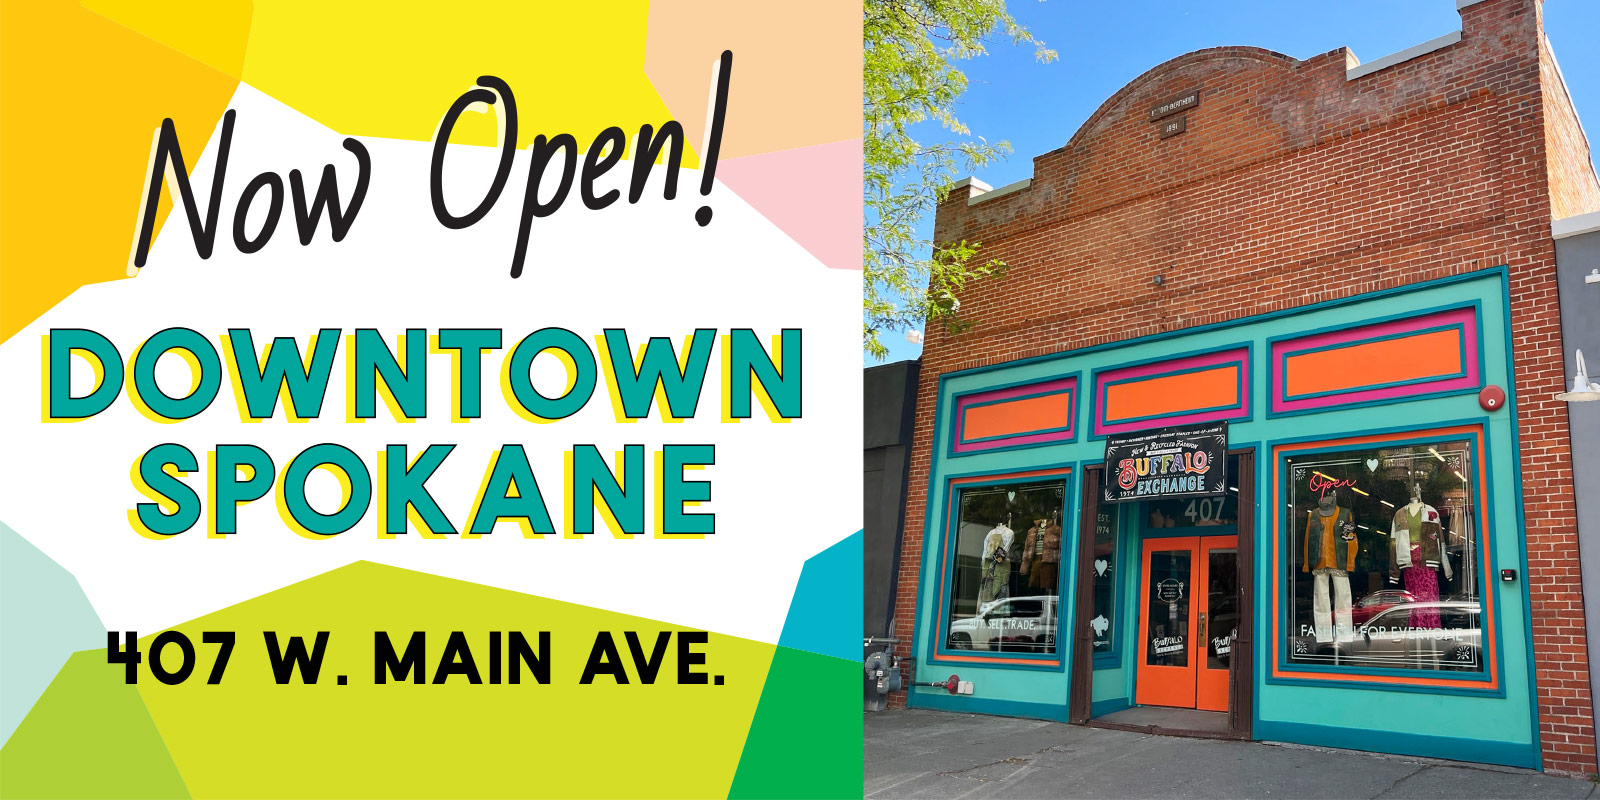 Exterior photo of the Spokane location. Reads Now open! Downtown Spokane 407 W Main Ave